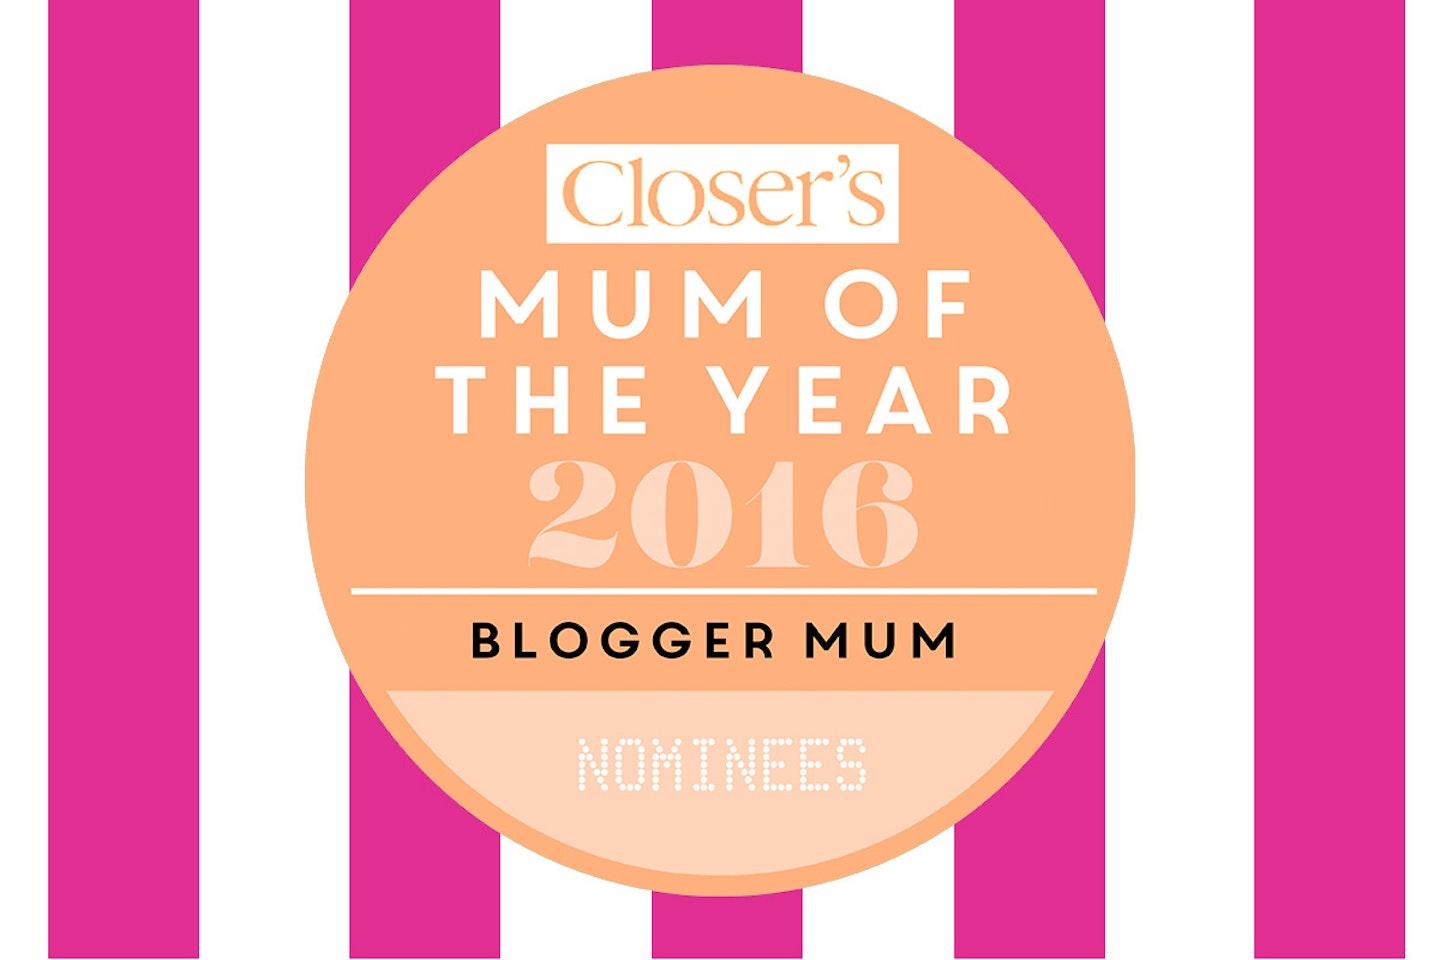 Blogger mum